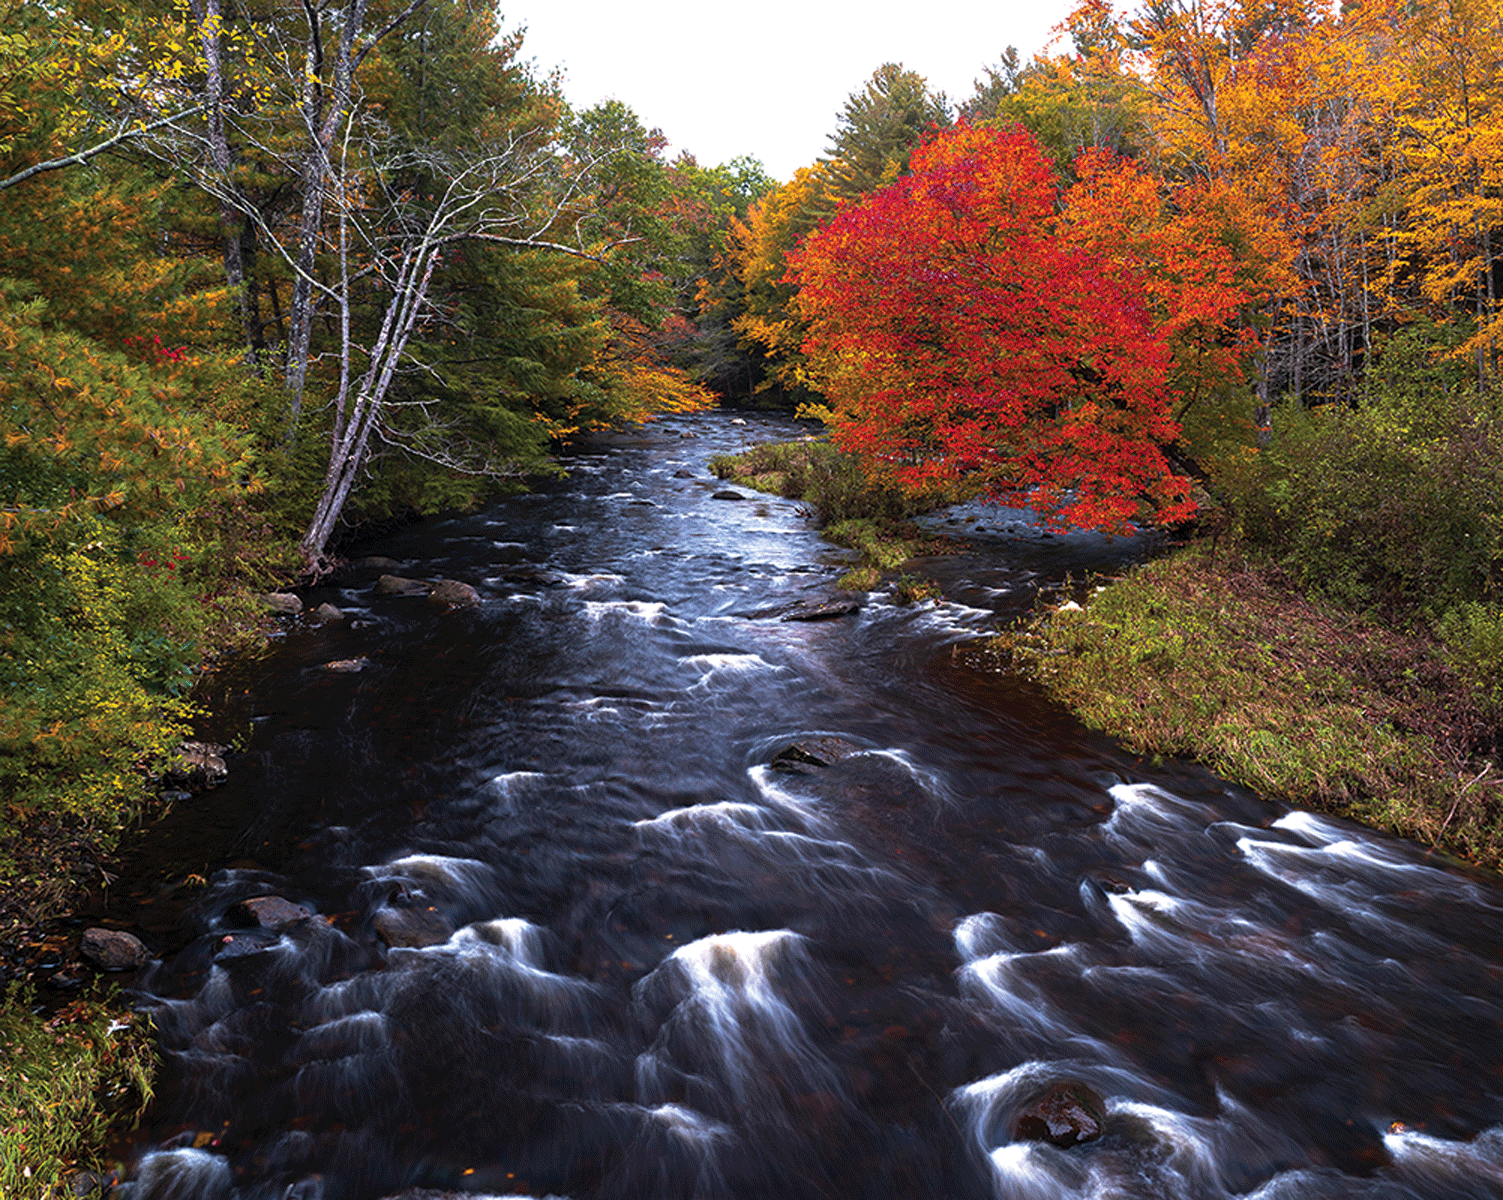 Photograph showing Farmington River. The trees along the bank show fall leaf colors.